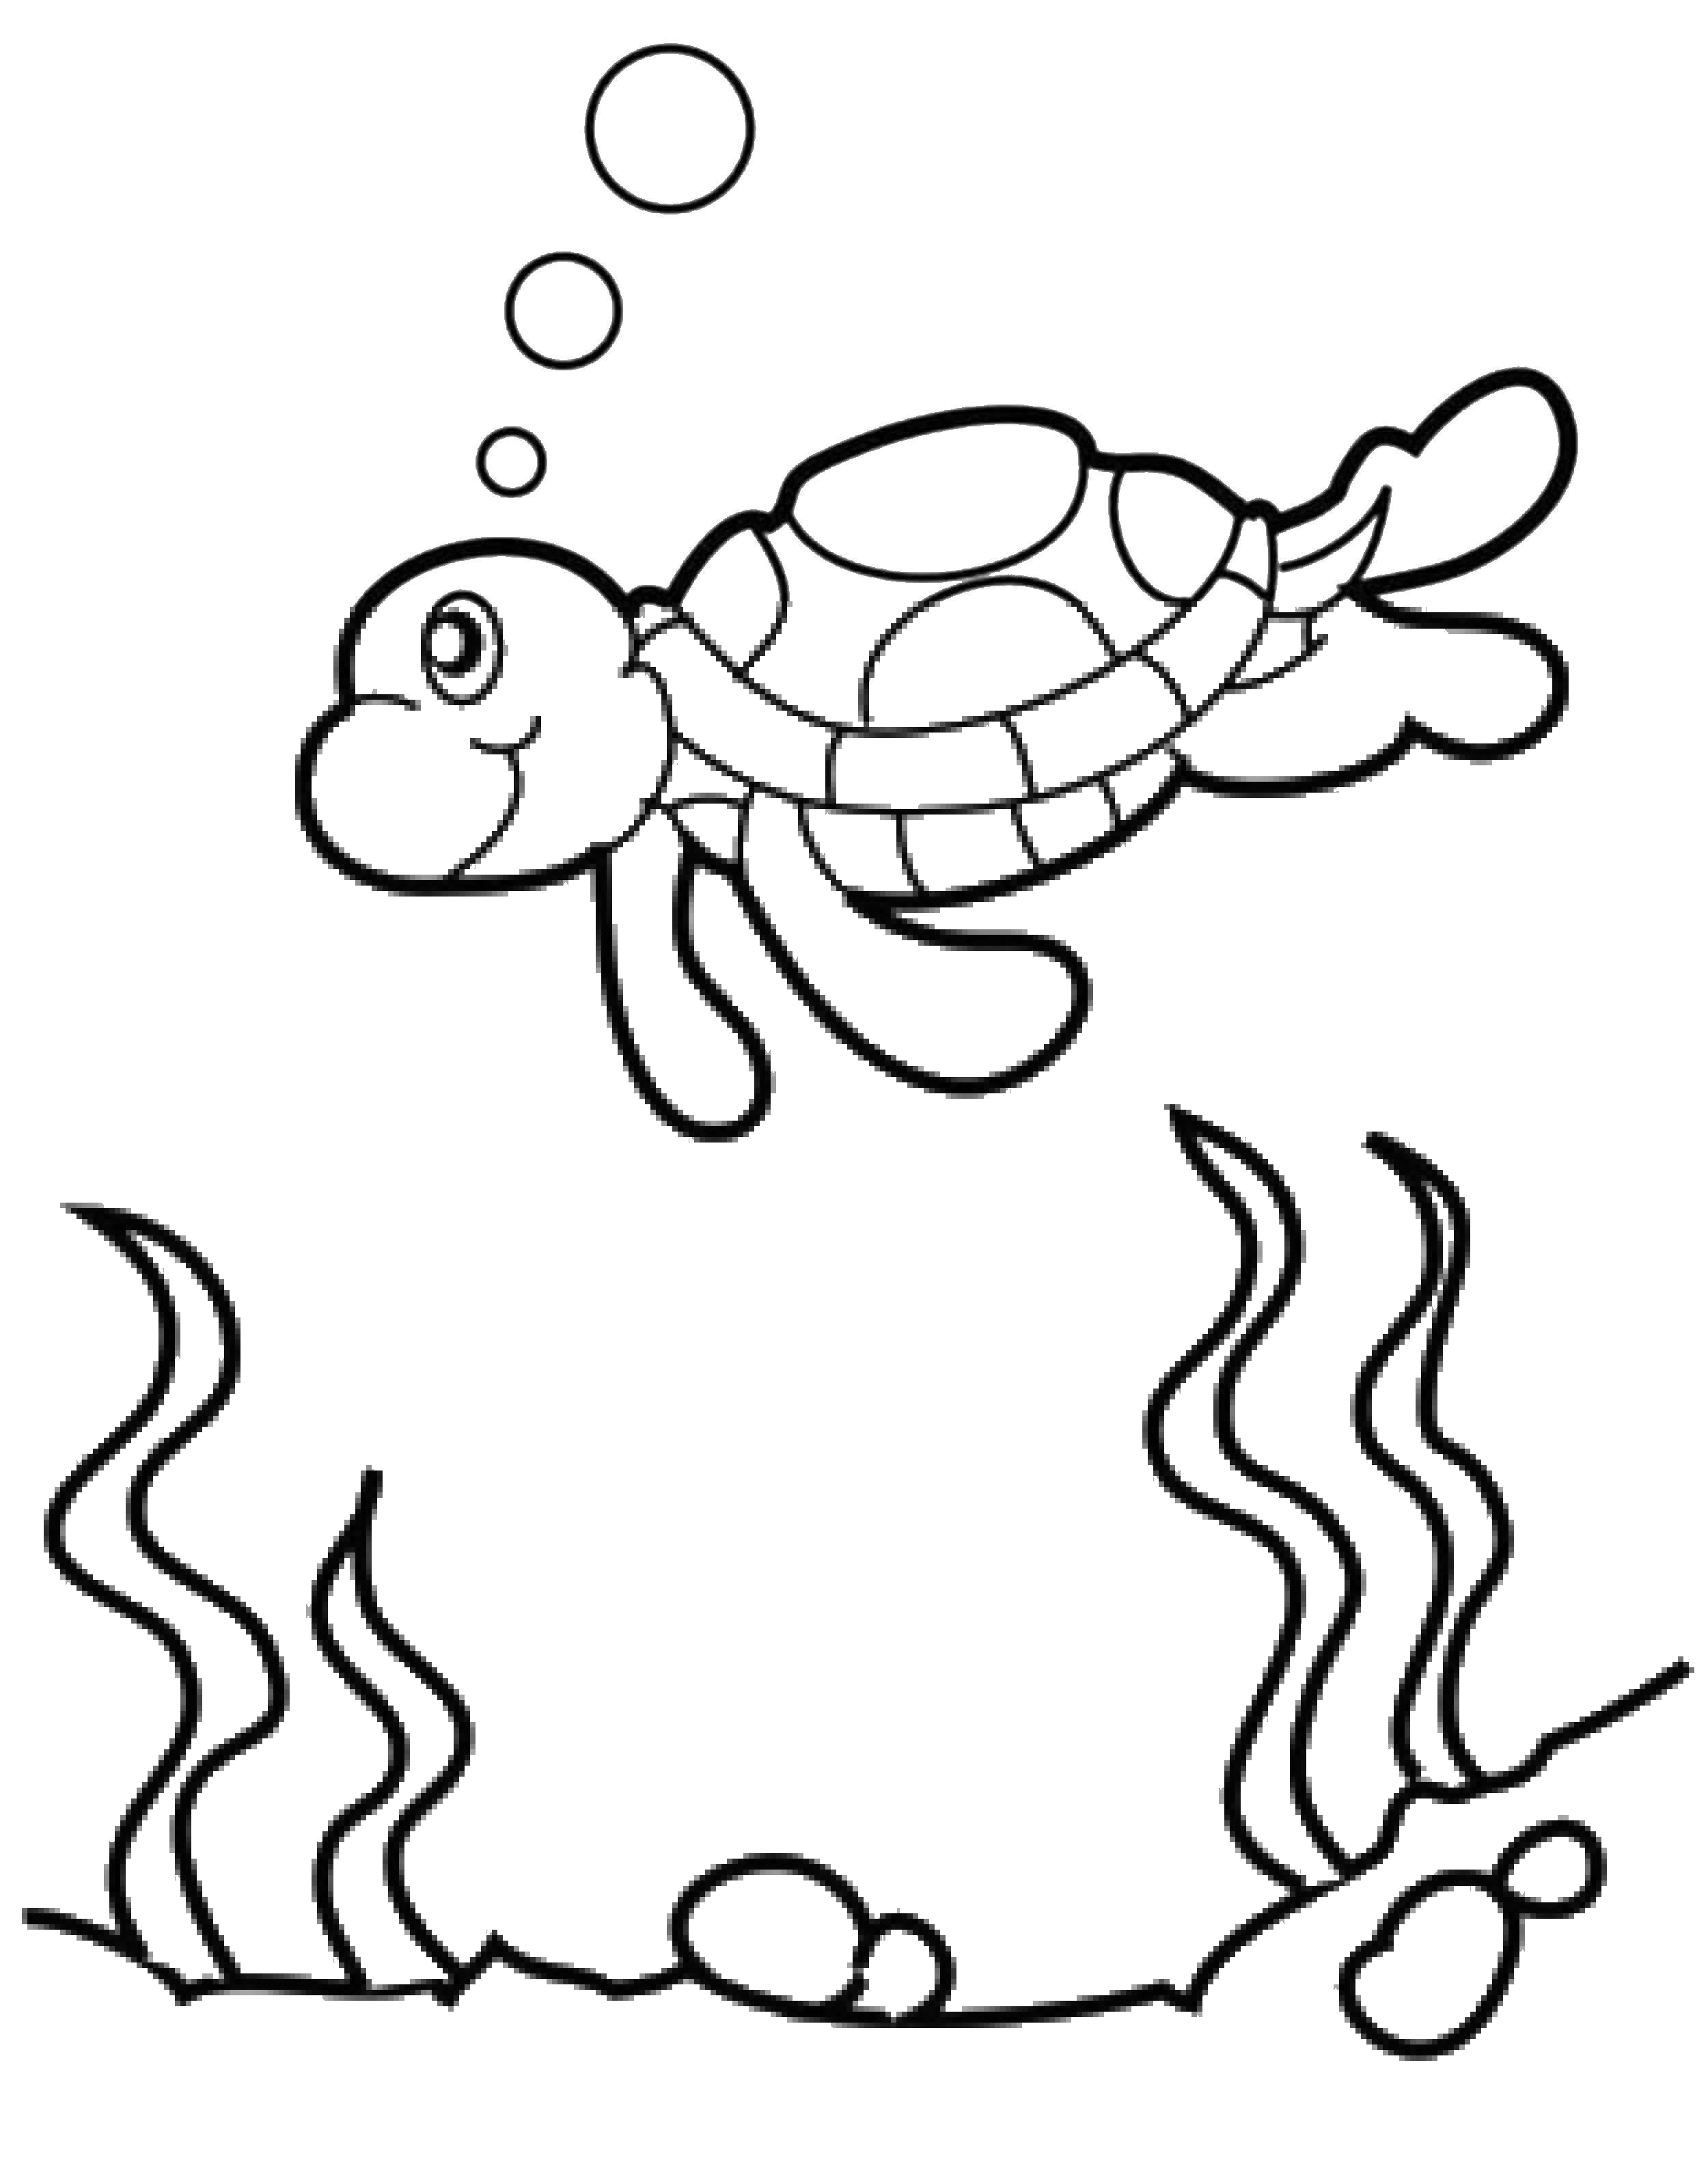 Название: Раскраска Черепашка в море. Категория: раскраски. Теги: море, черепашка купается в море.